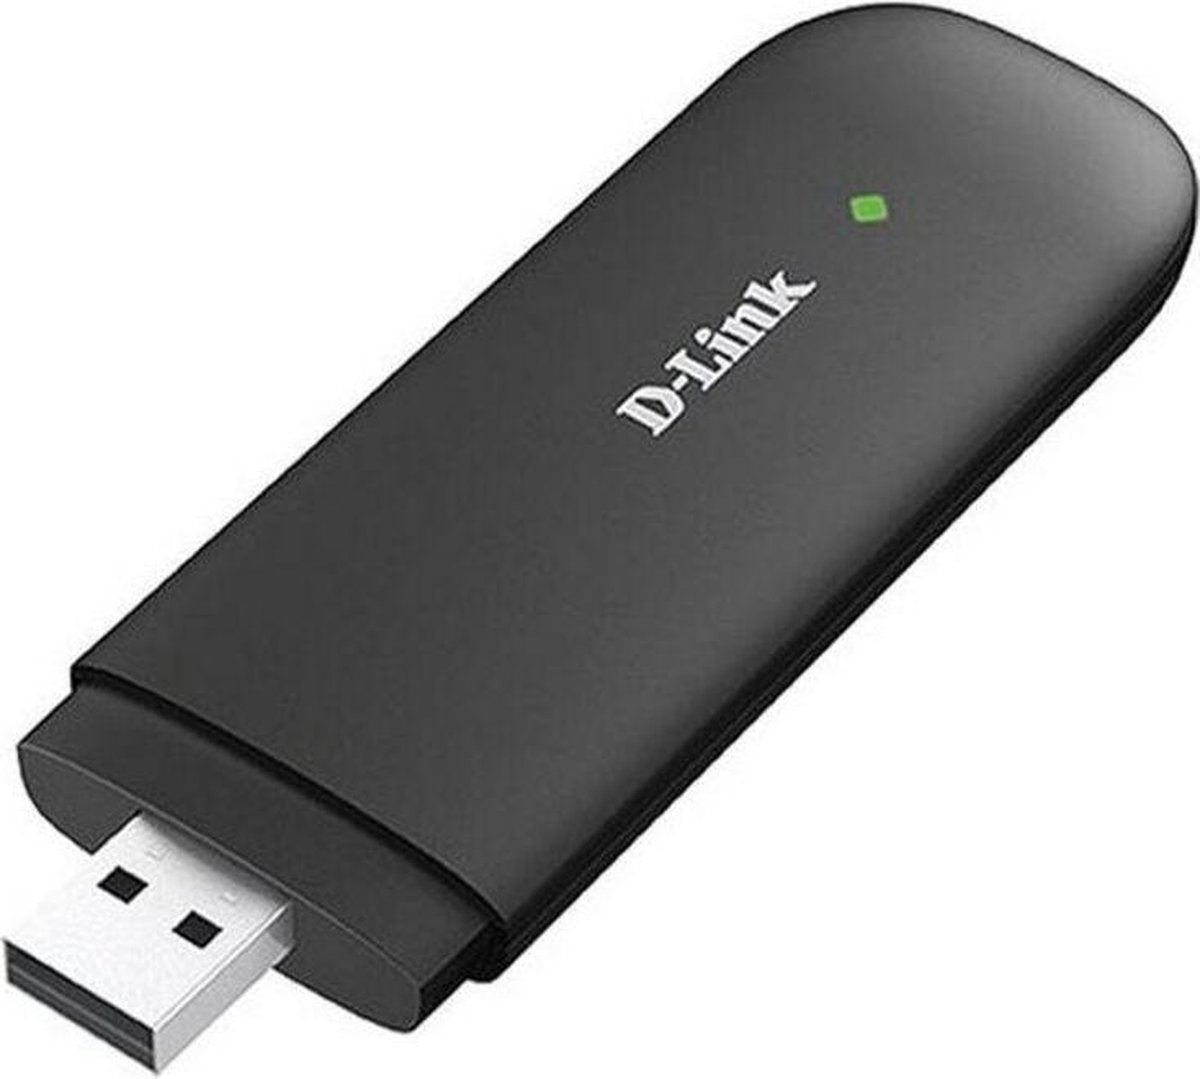 D-Link DWM-222 - 4G USB dongle